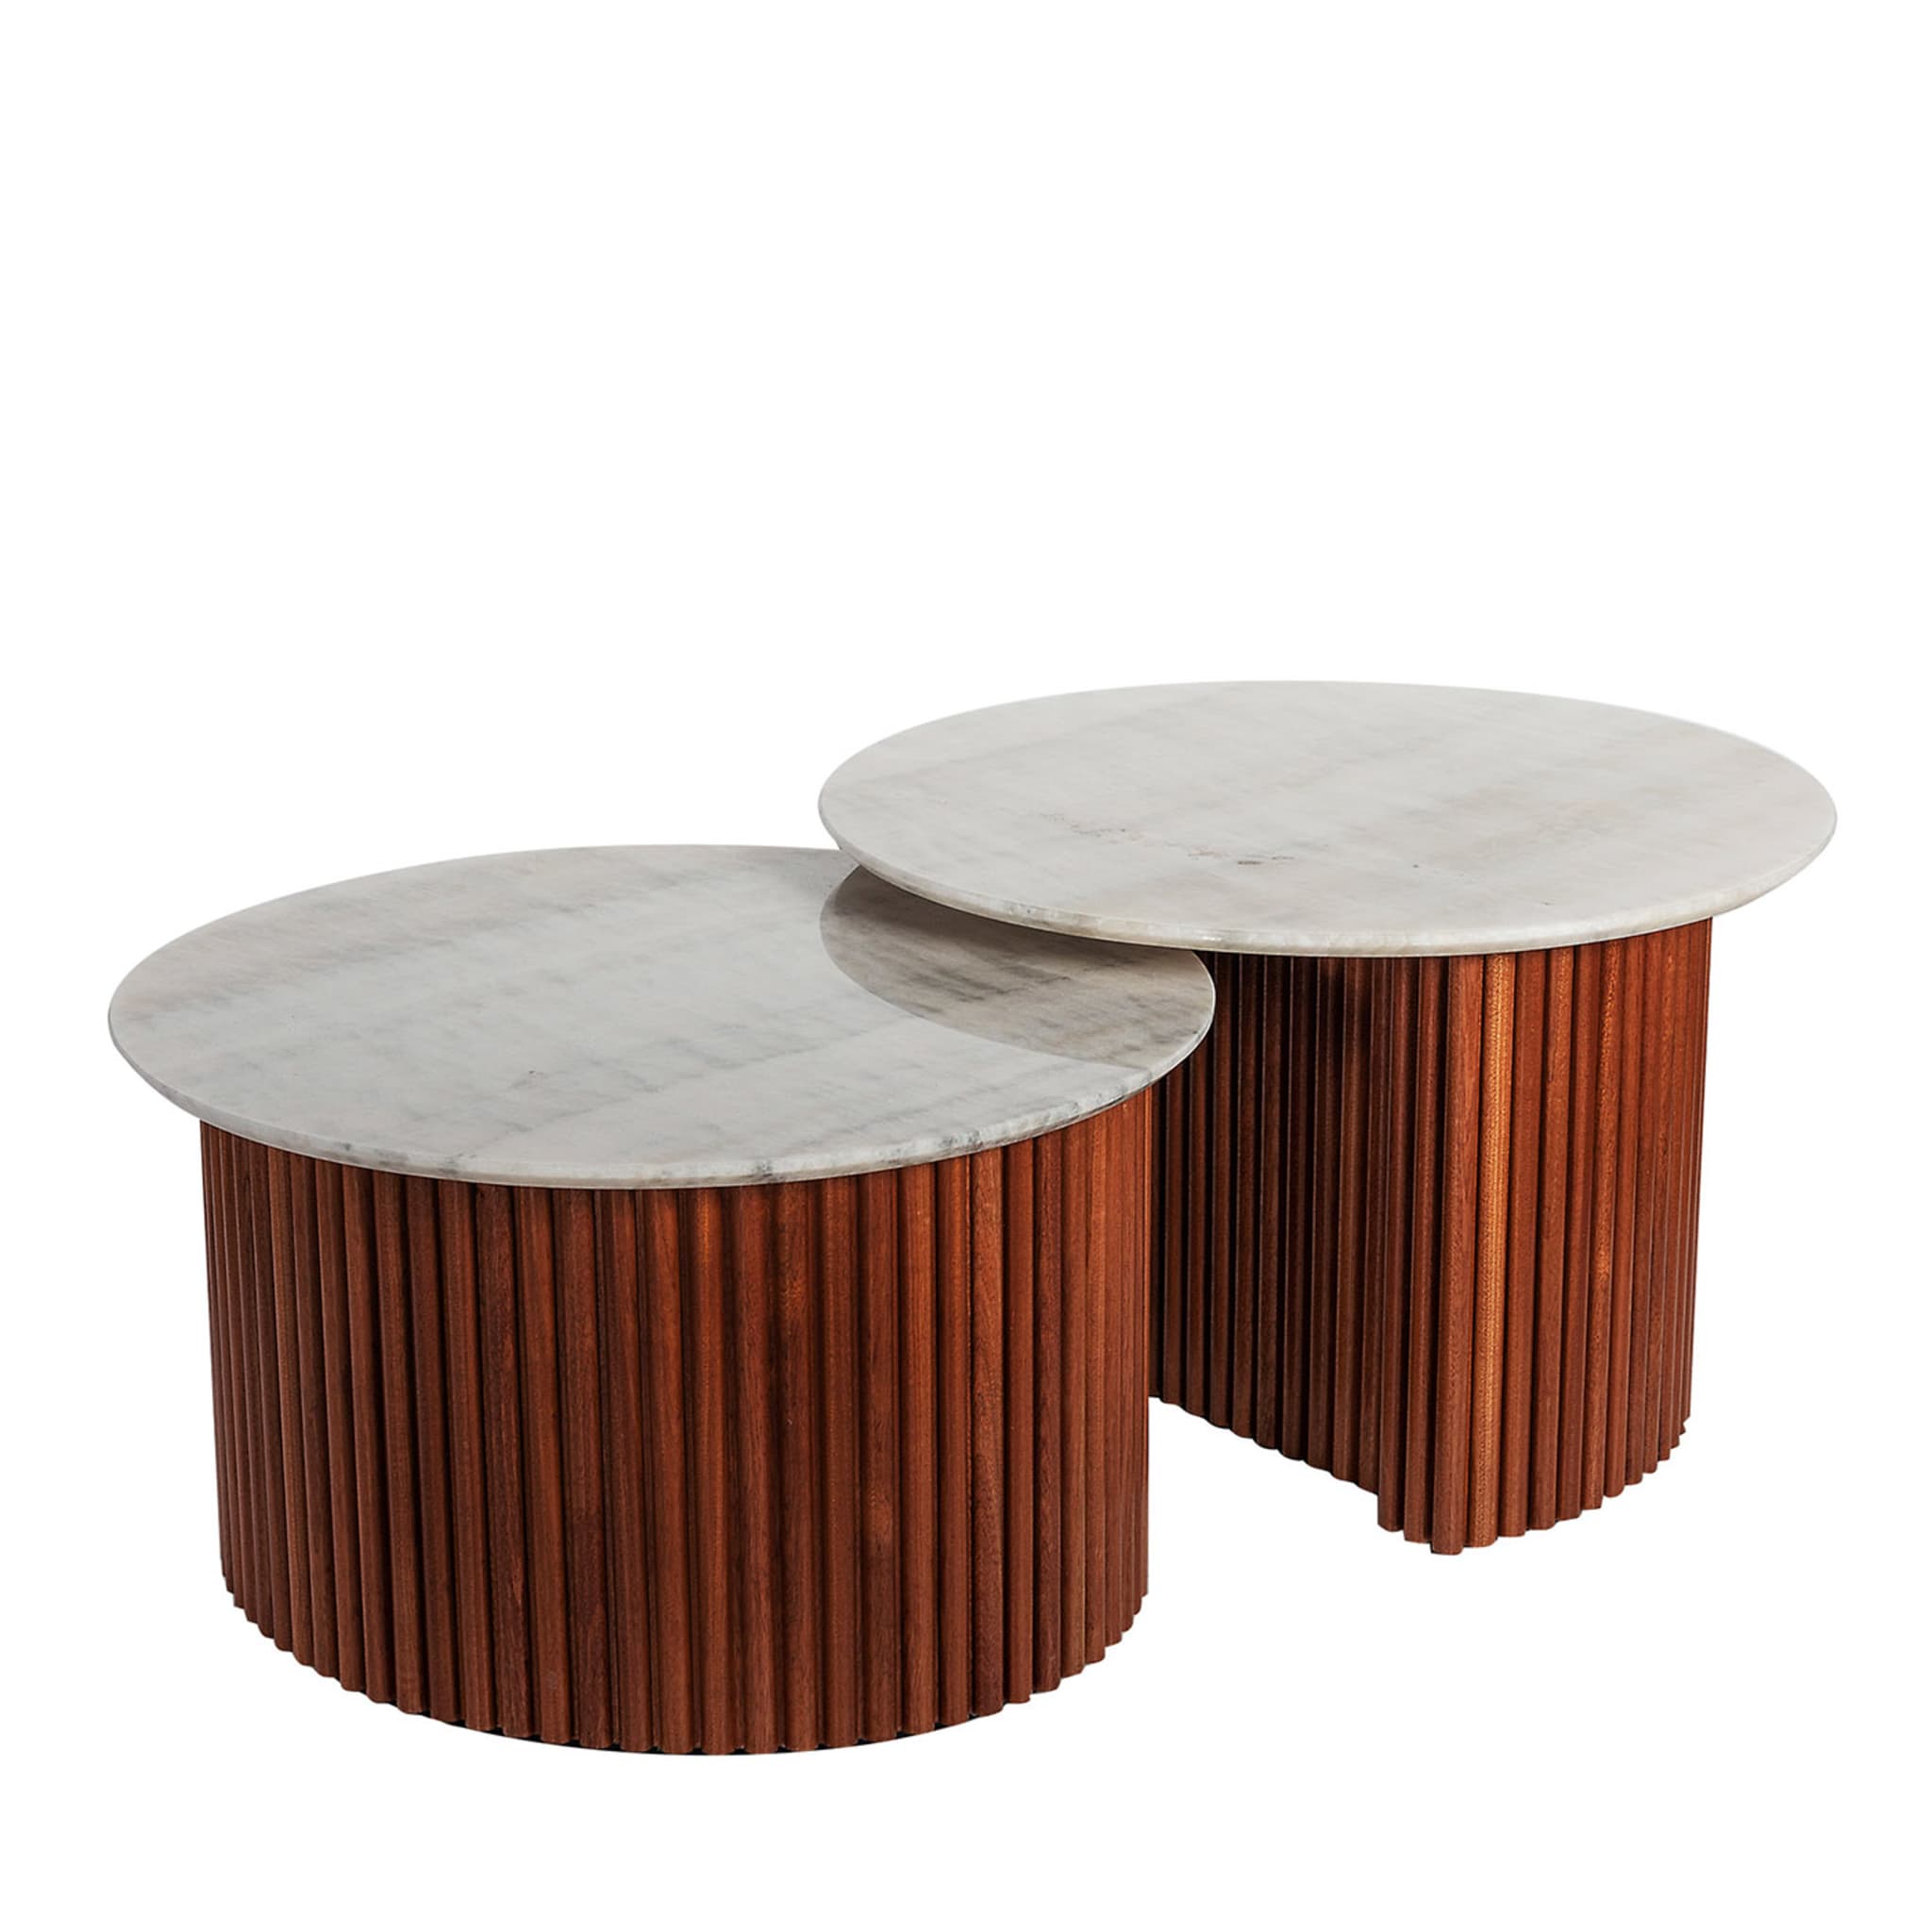 Alchimia Regio Set of 2 Gray Onyx Coffee Tables by Martina Innocenti - Main view